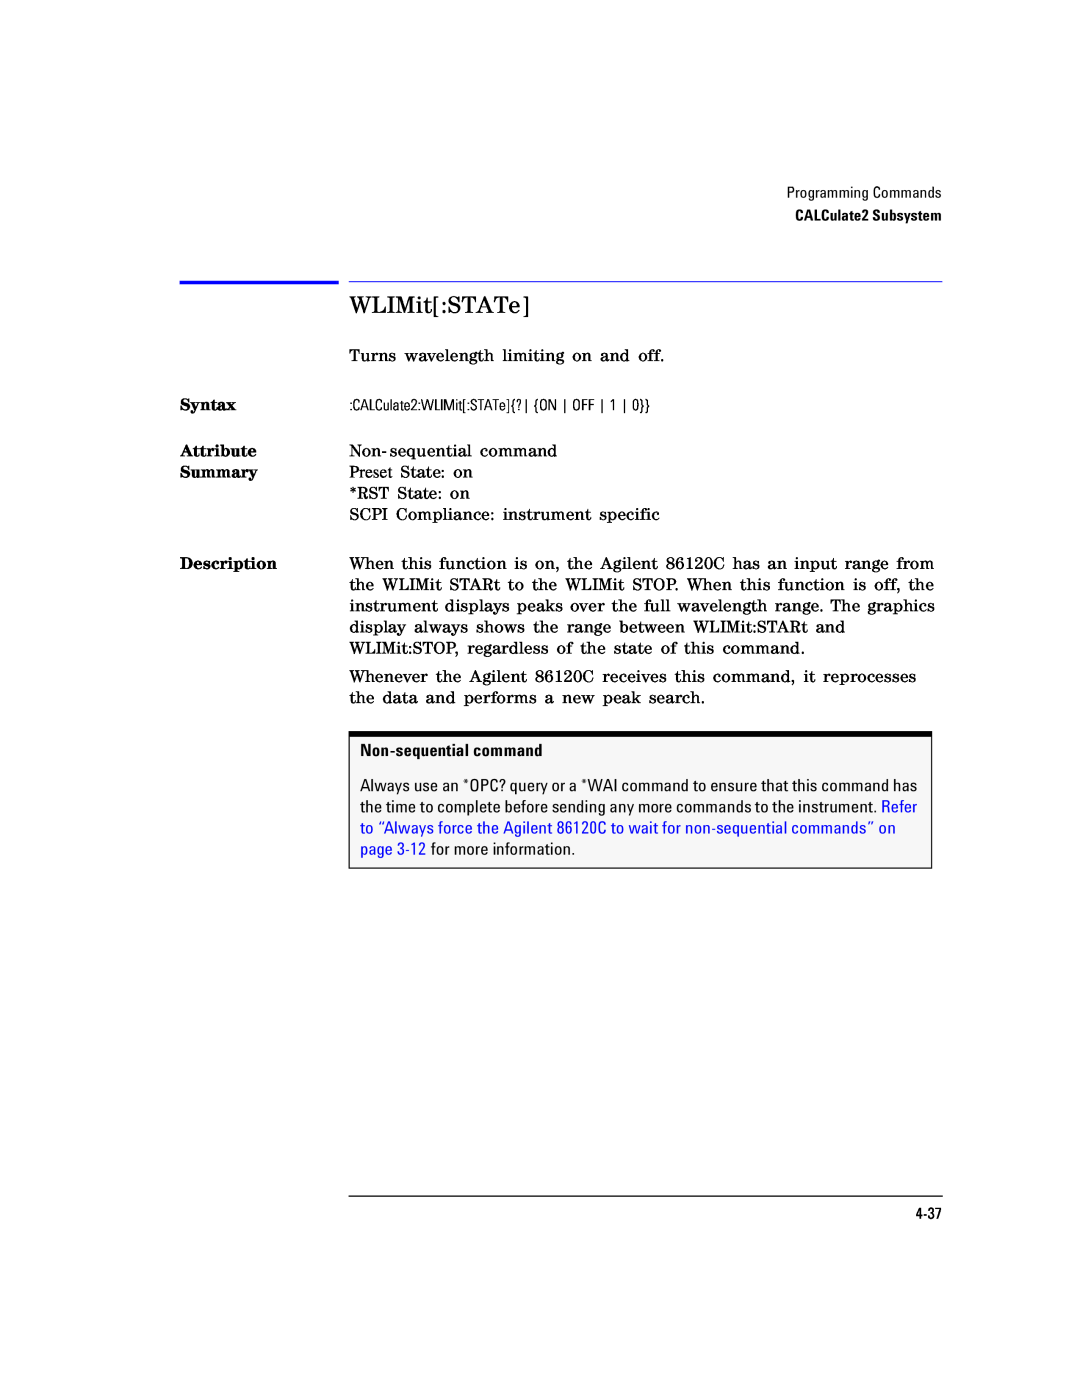 Agilent Technologies Agilent 86120C manual WLIMitSTATe, Syntax, Attribute, Summary, Description, Non-sequential command 